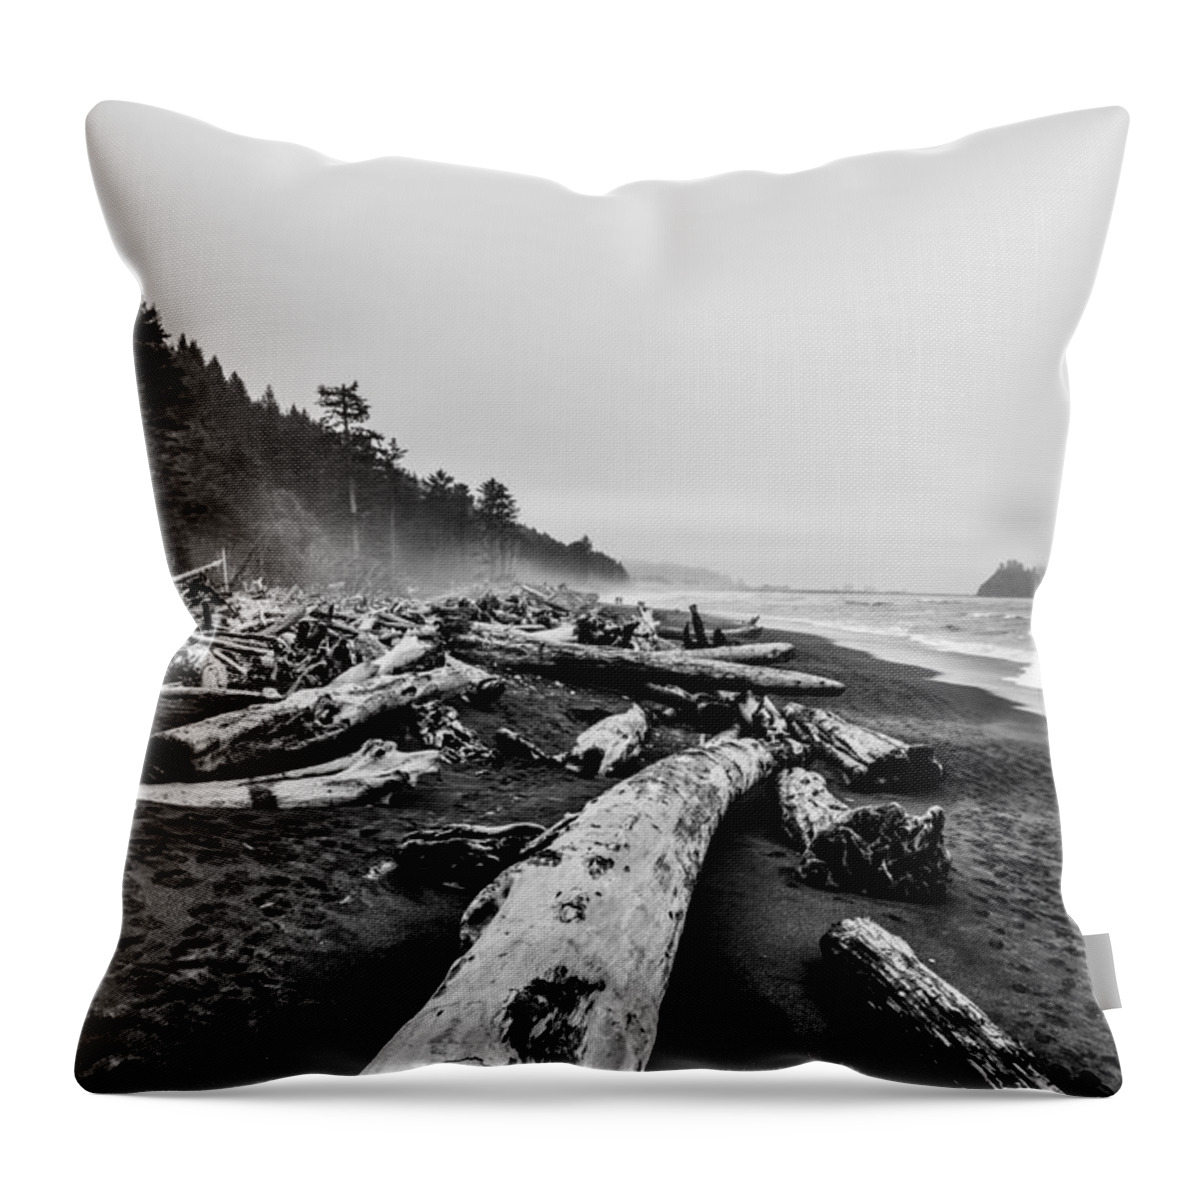 Rain Throw Pillow featuring the photograph Rialto Beach Black and White by Pelo Blanco Photo